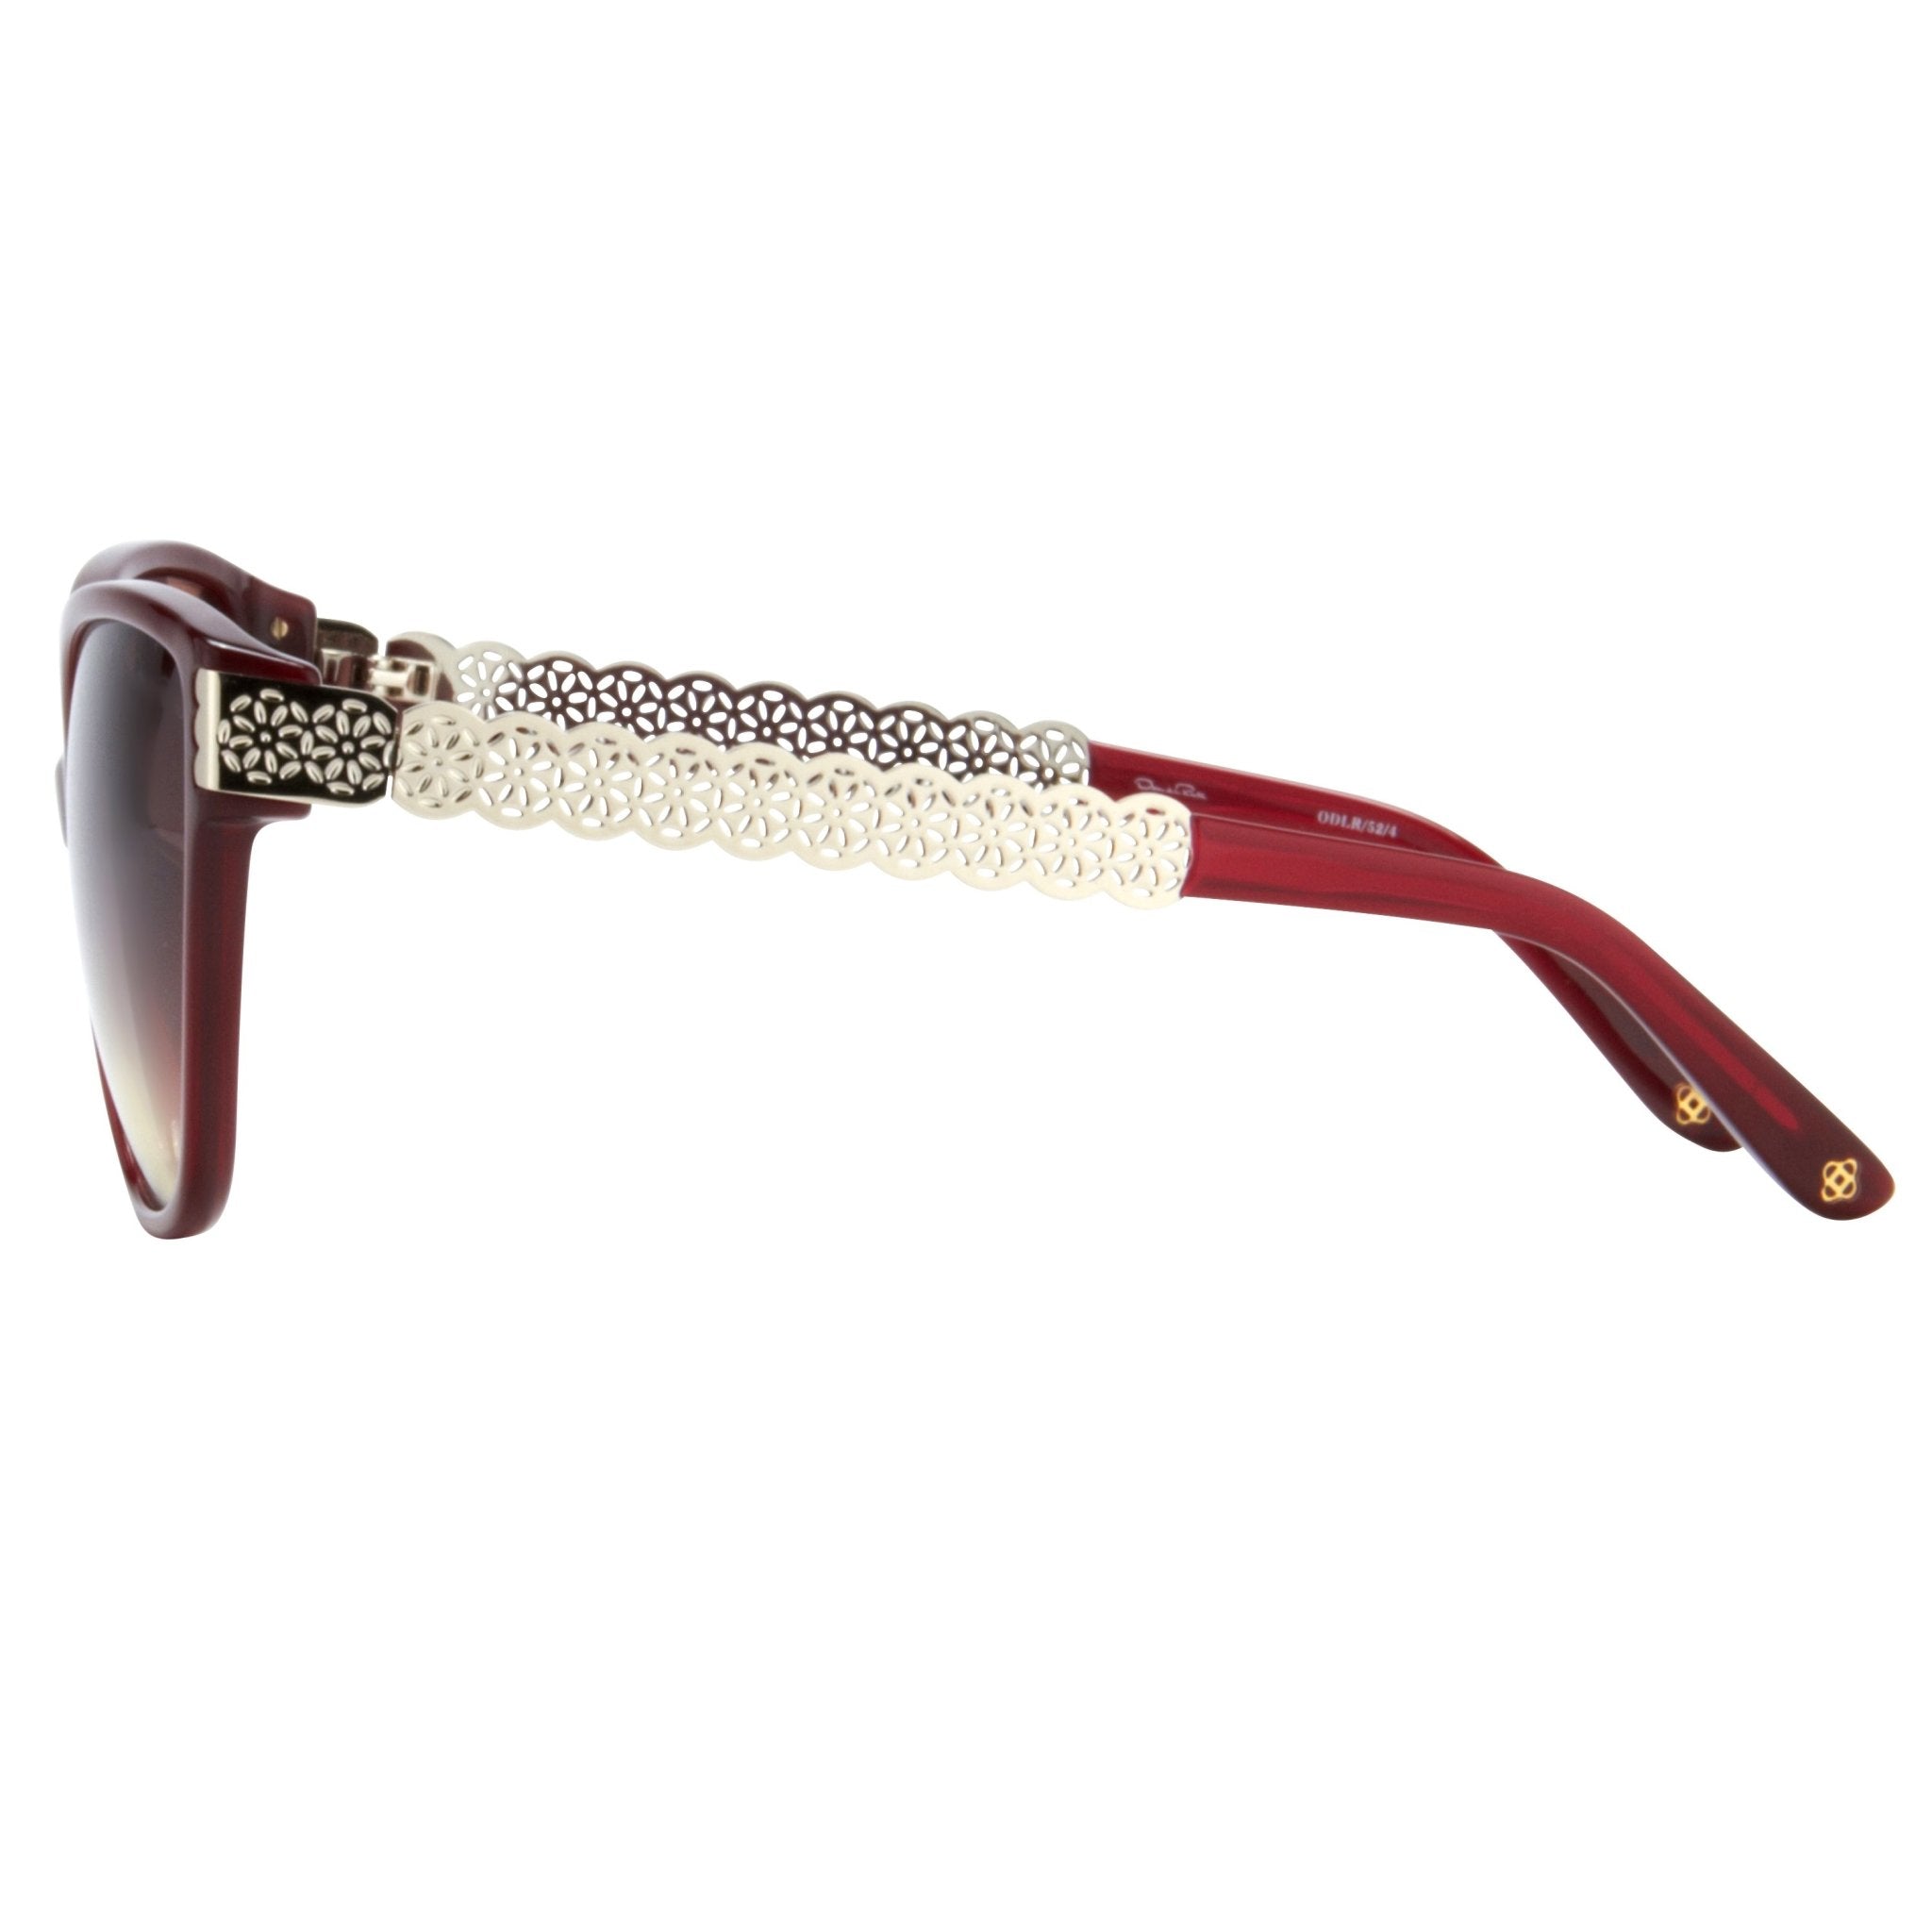 Oscar De La Renta Women Sunglasses Oval Deep Red with Brown Graduated Lenses - ODLR52C4SUN - Watches & Crystals